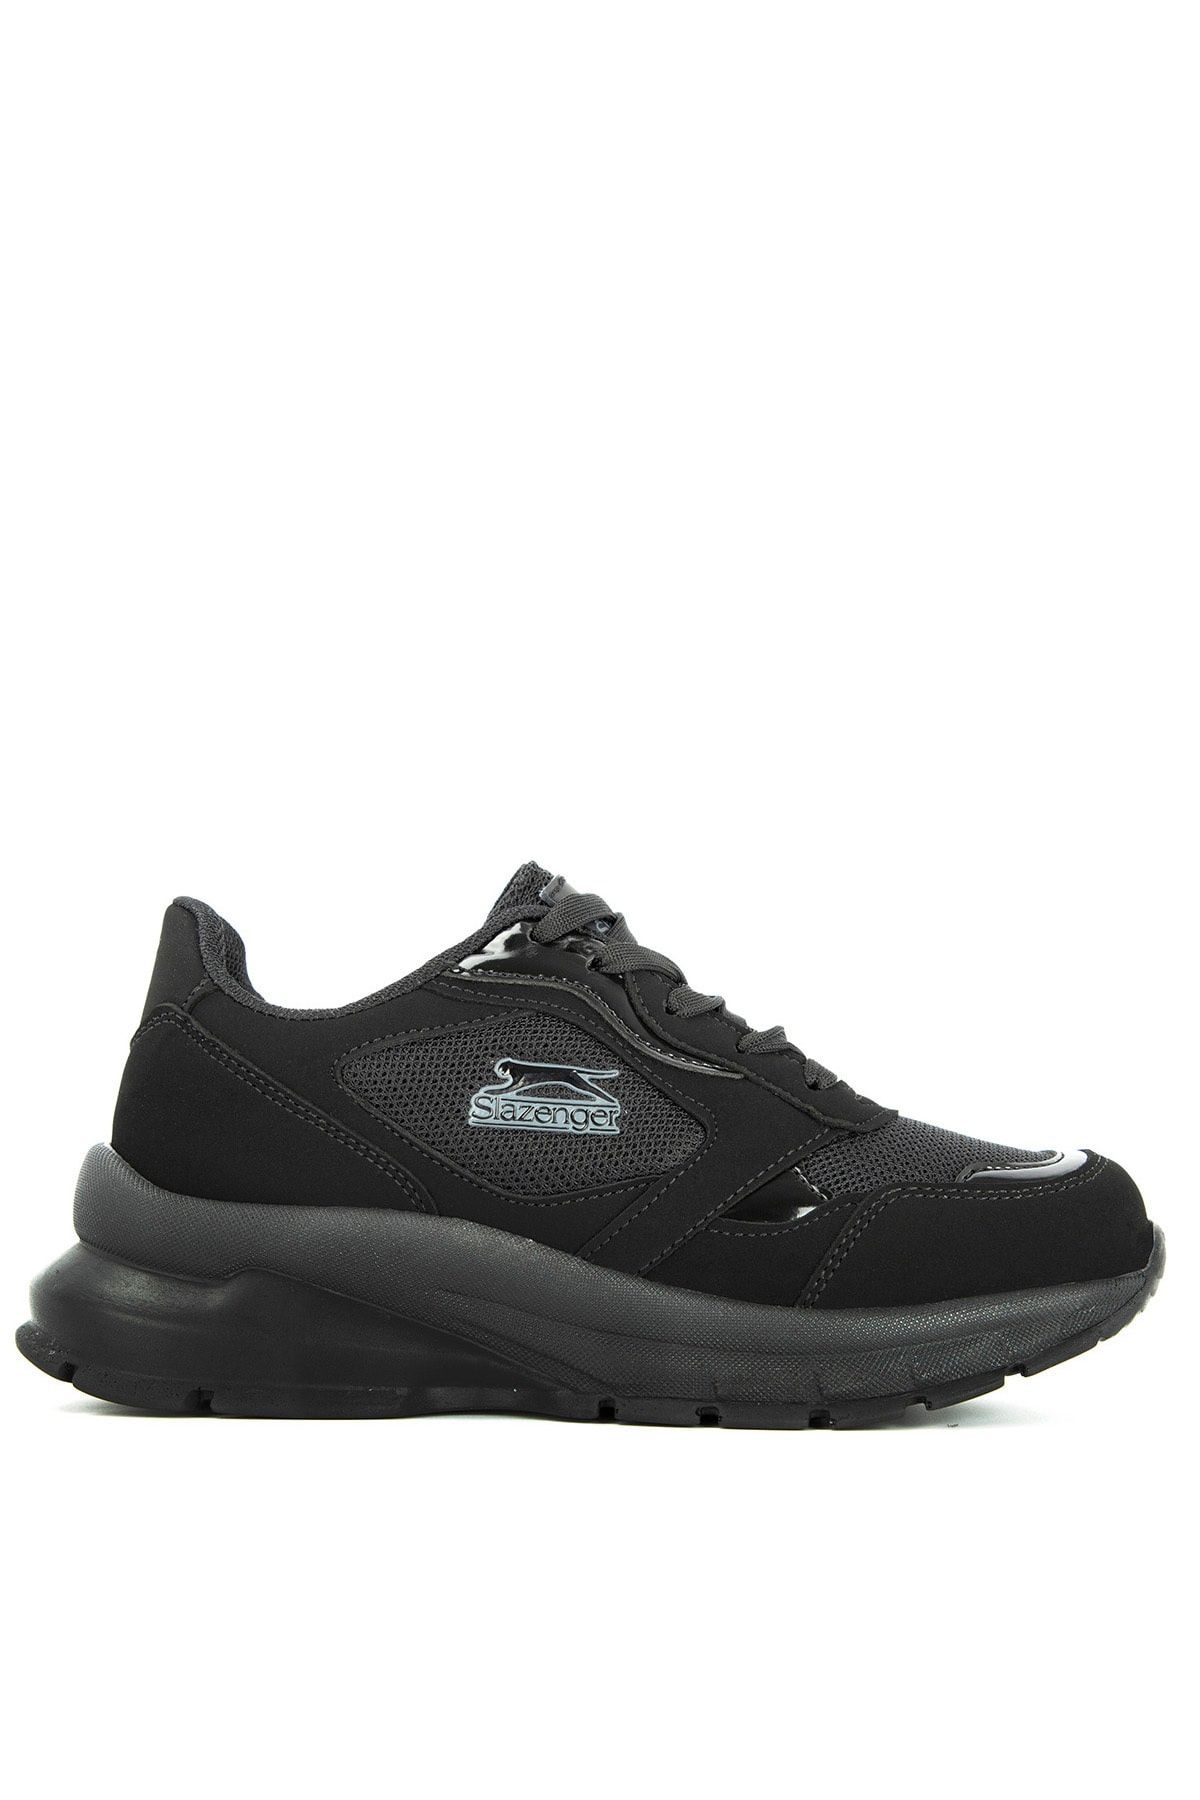 Slazenger Kansas Sneaker Kadın Ayakkabı Siyah / Siyah Sa11lk016